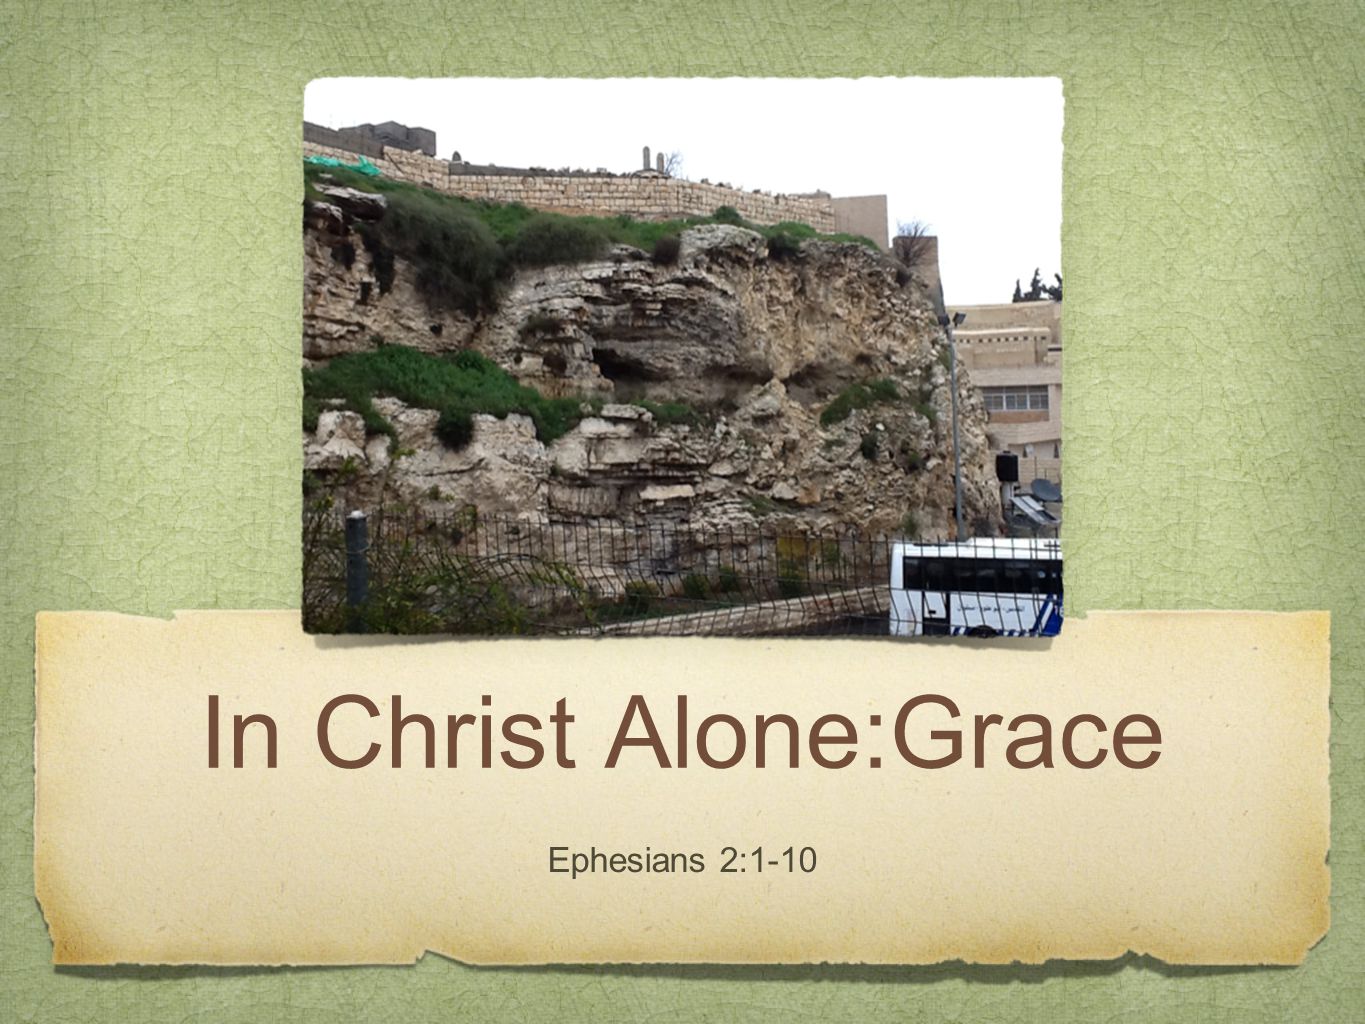 In Christ Alone:Grace Ephesians 2:1-10